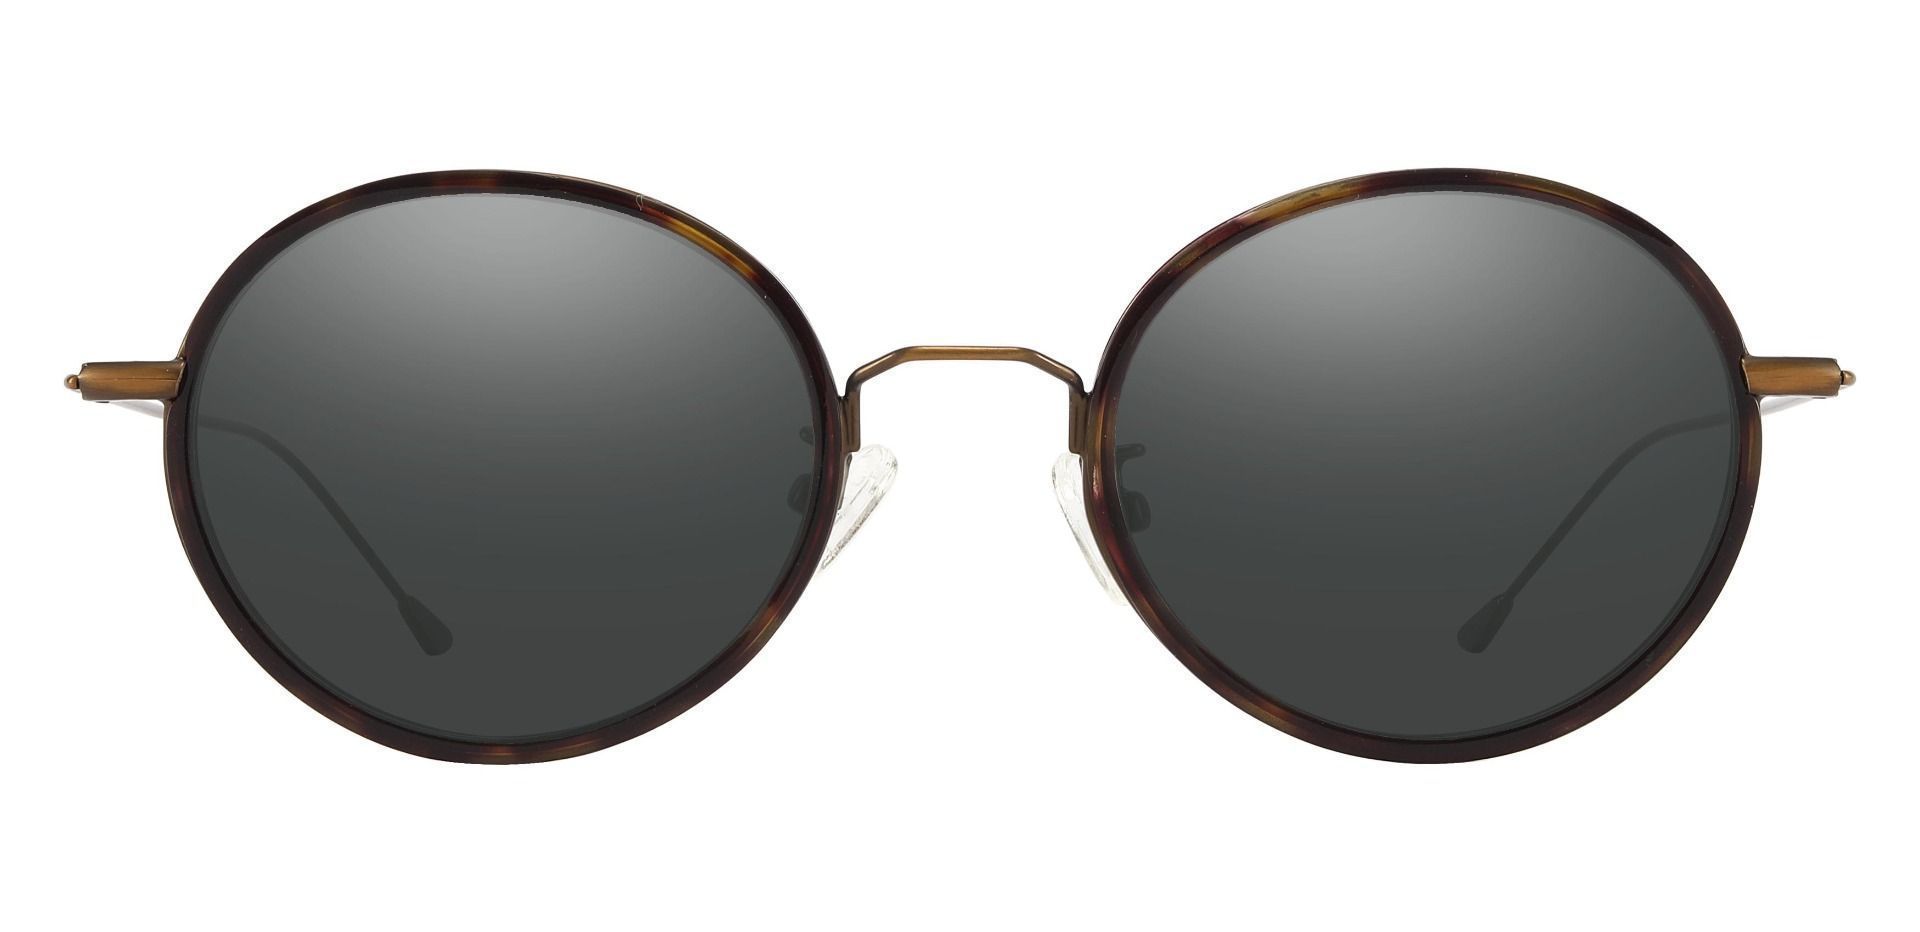 Malverne Oval Non-Rx Sunglasses - Tortoise Frame With Gray Lenses